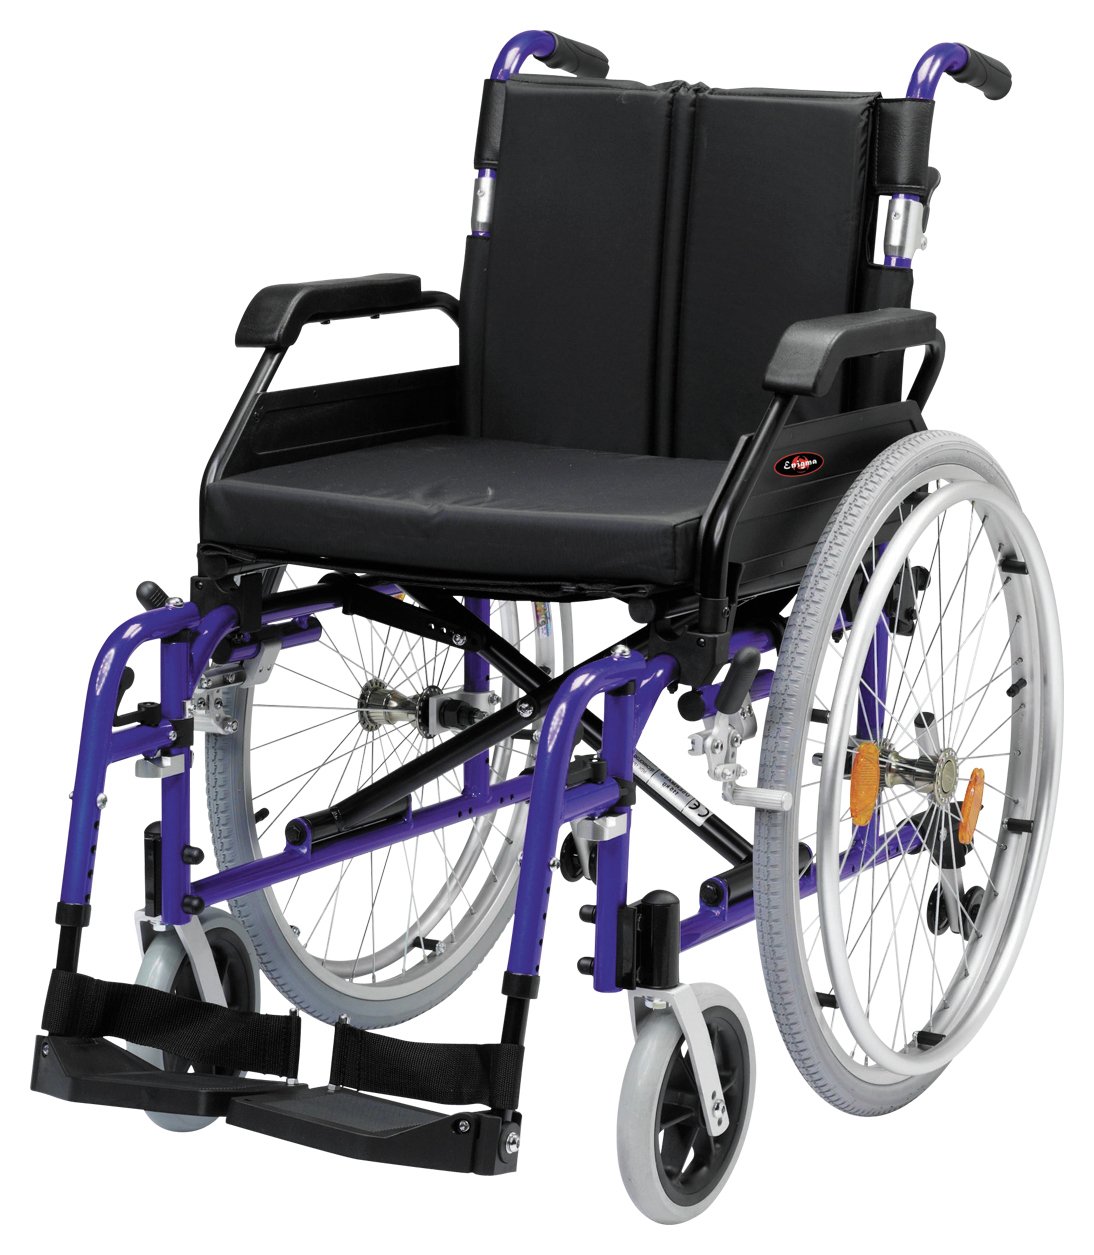 XS Aluminium Self Propelled Wheelchair. Review